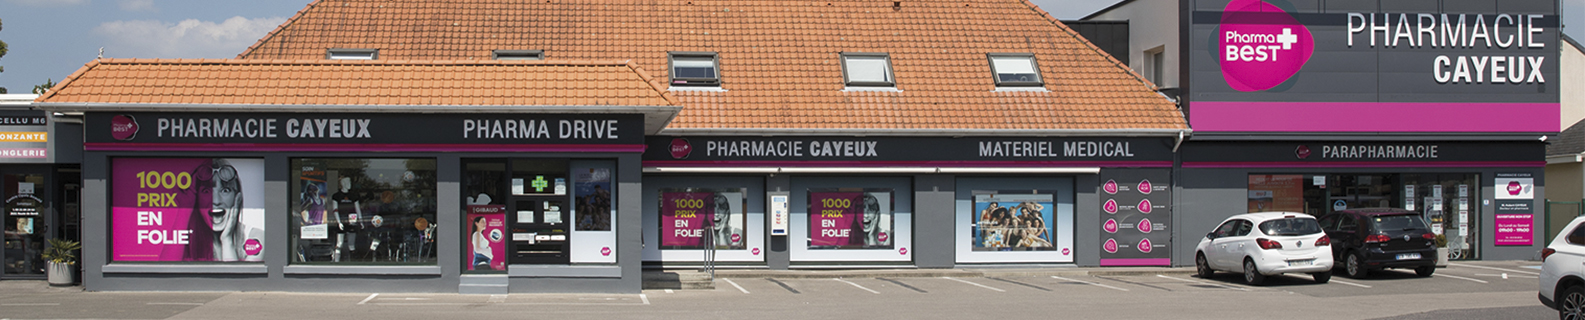 Image panoramique de la façade de la pharmacie